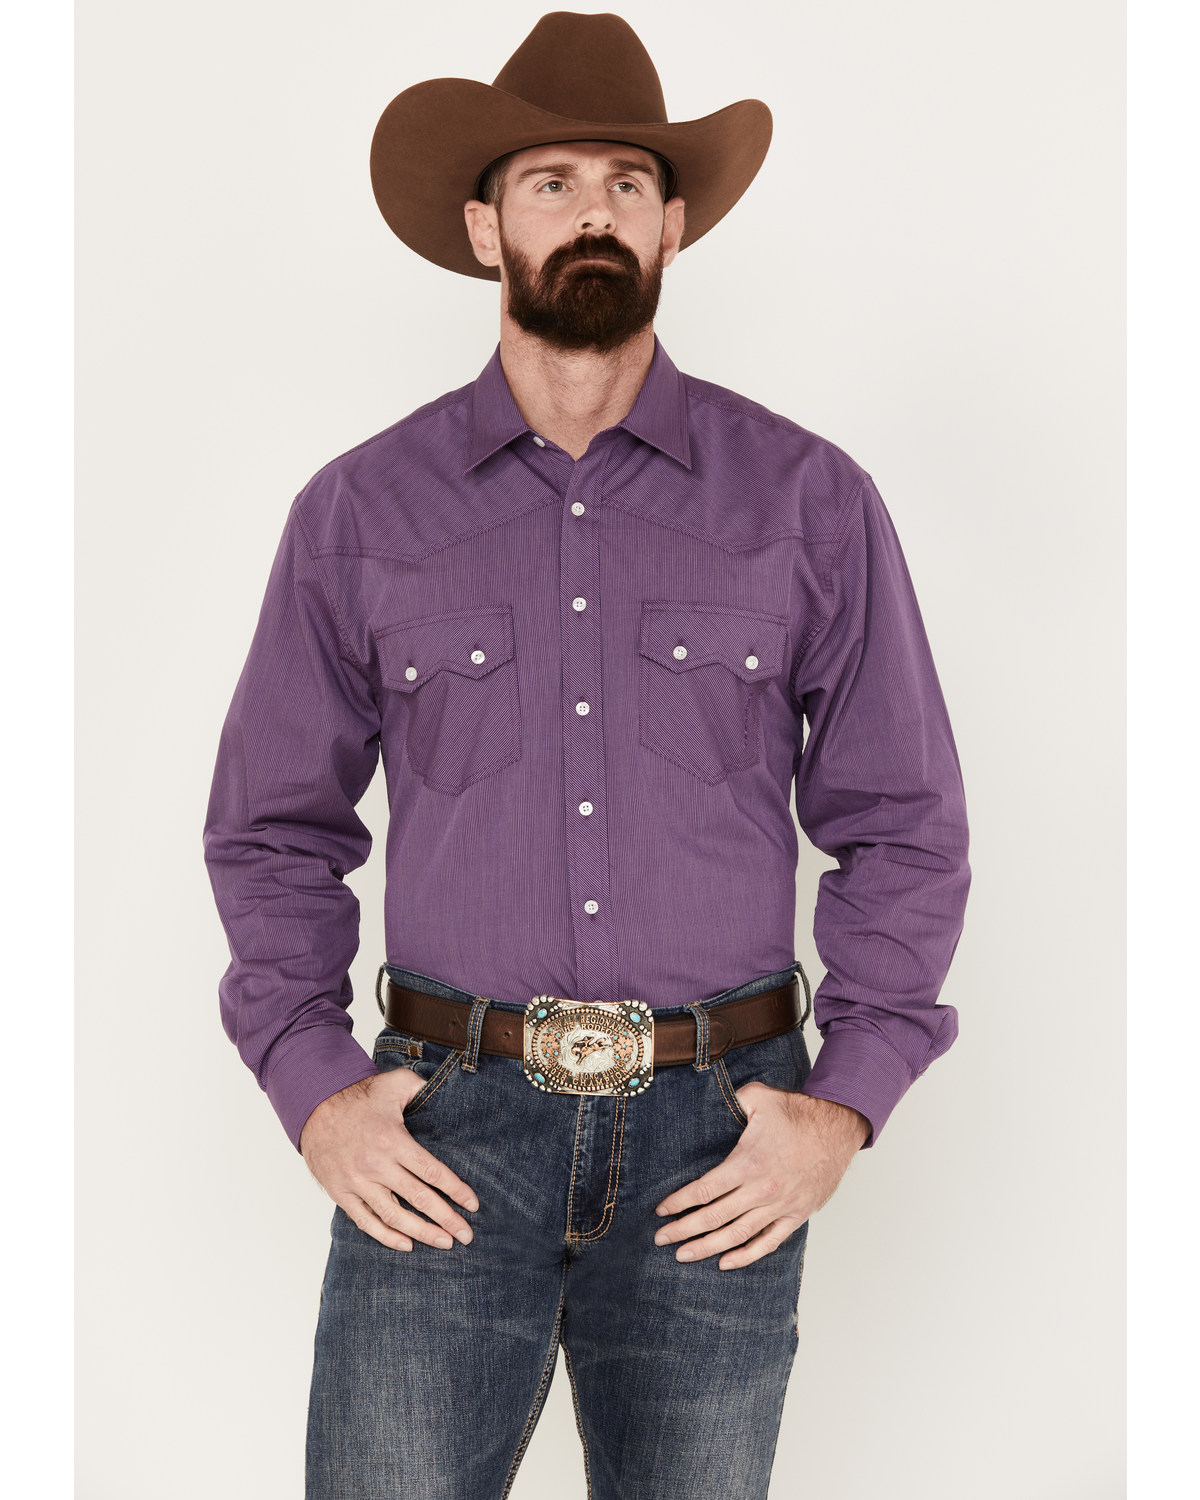 Resistol Men's Pinstripe Print Long Sleeve Button Down Western Shirt